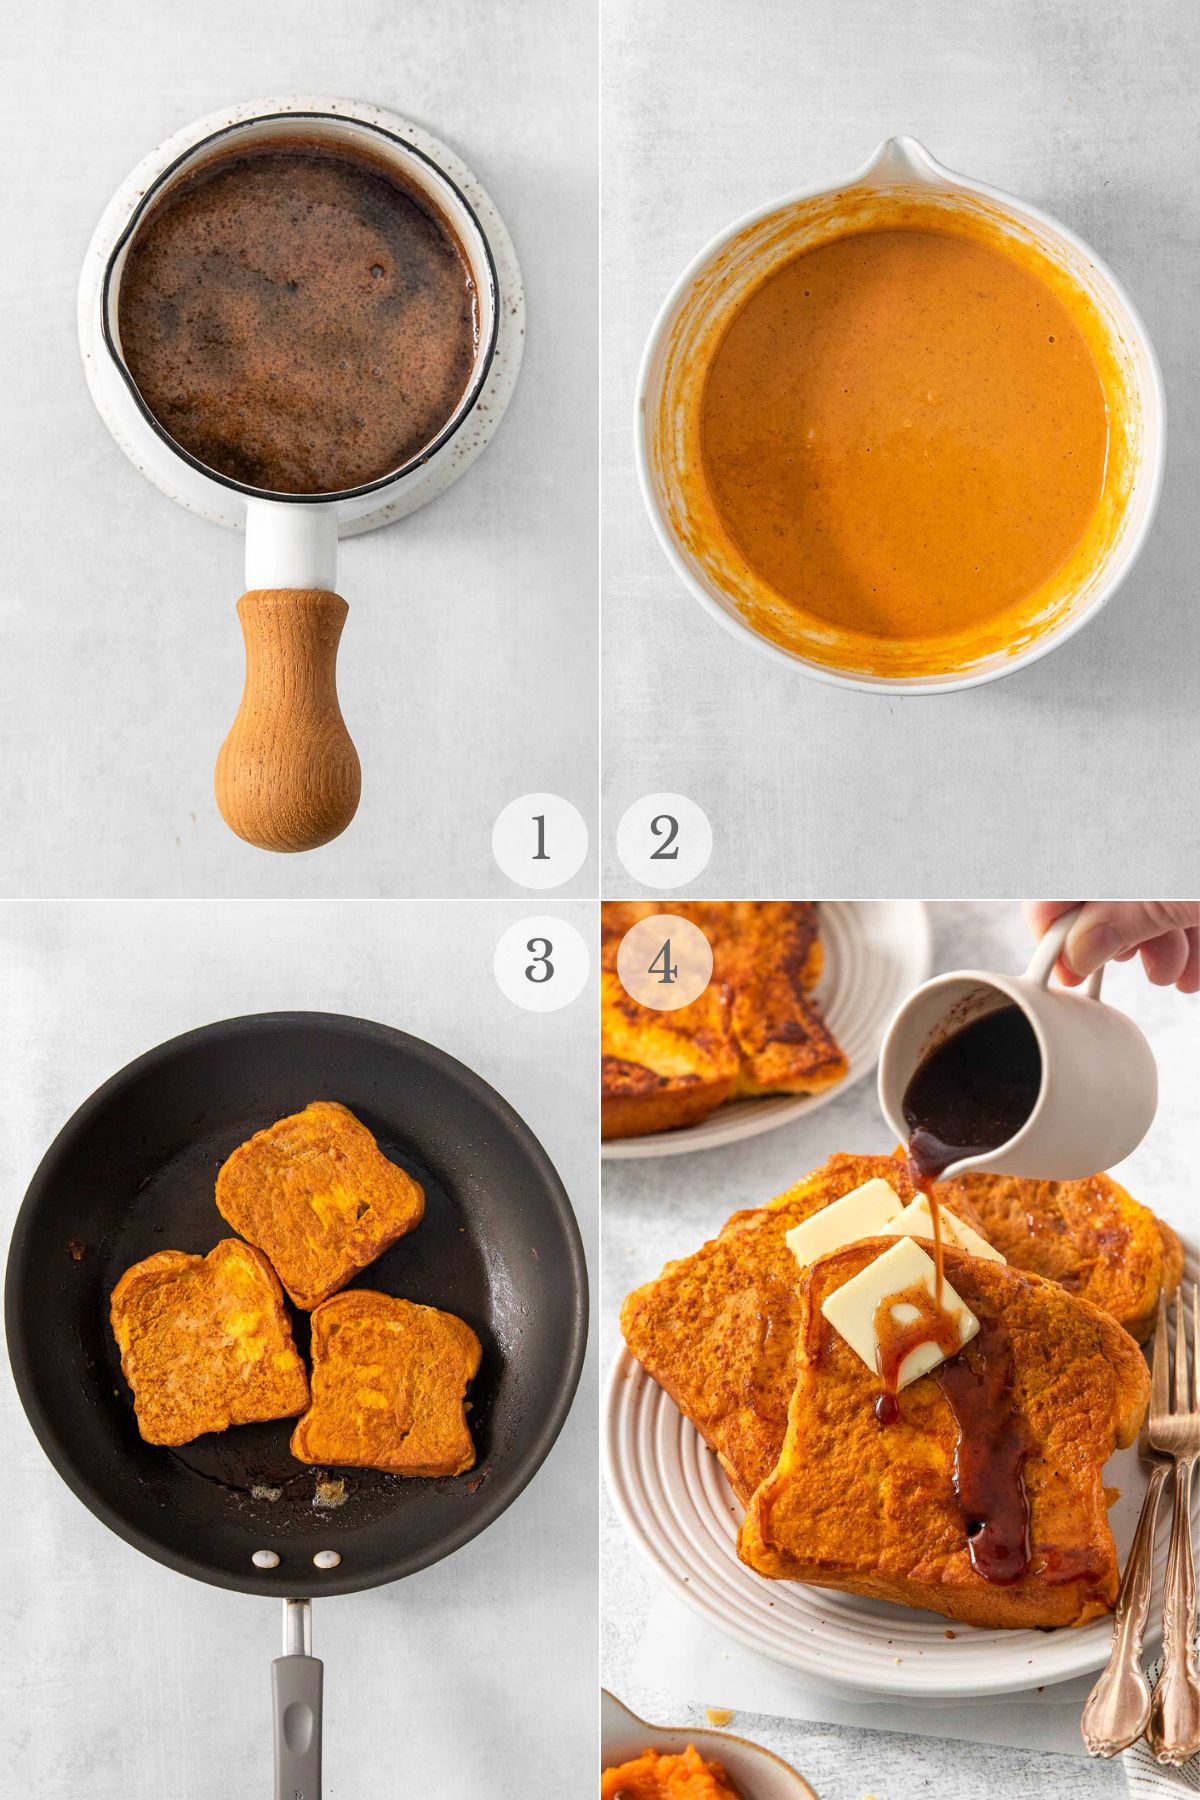 pumpkin french toast recipe steps 1-4.